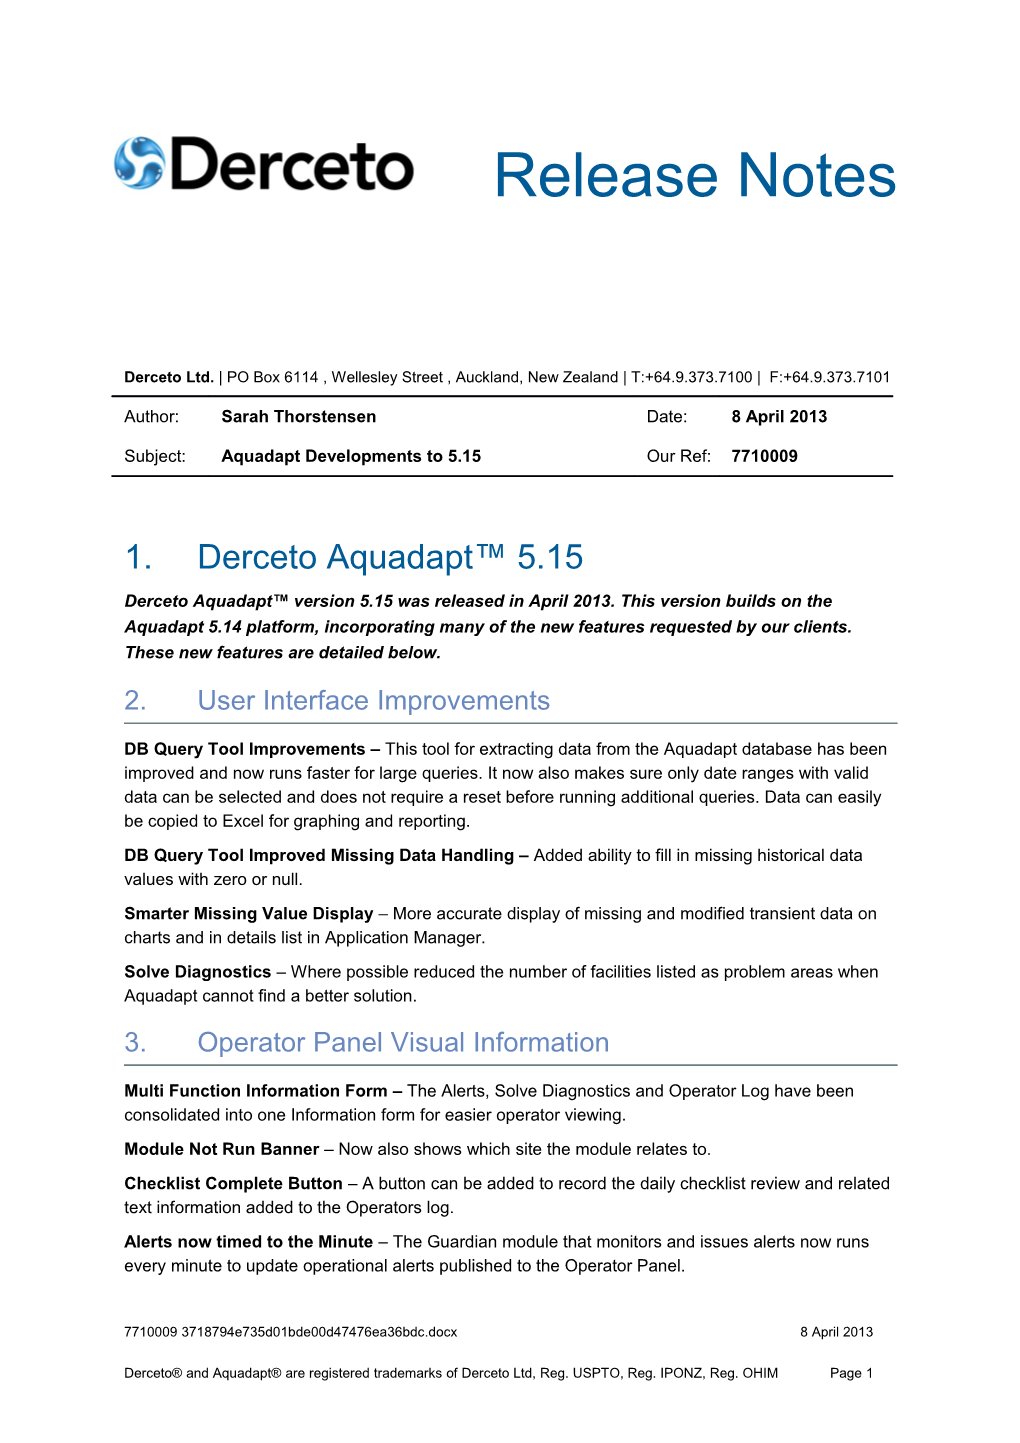 Aquadapt Developments to 5.15